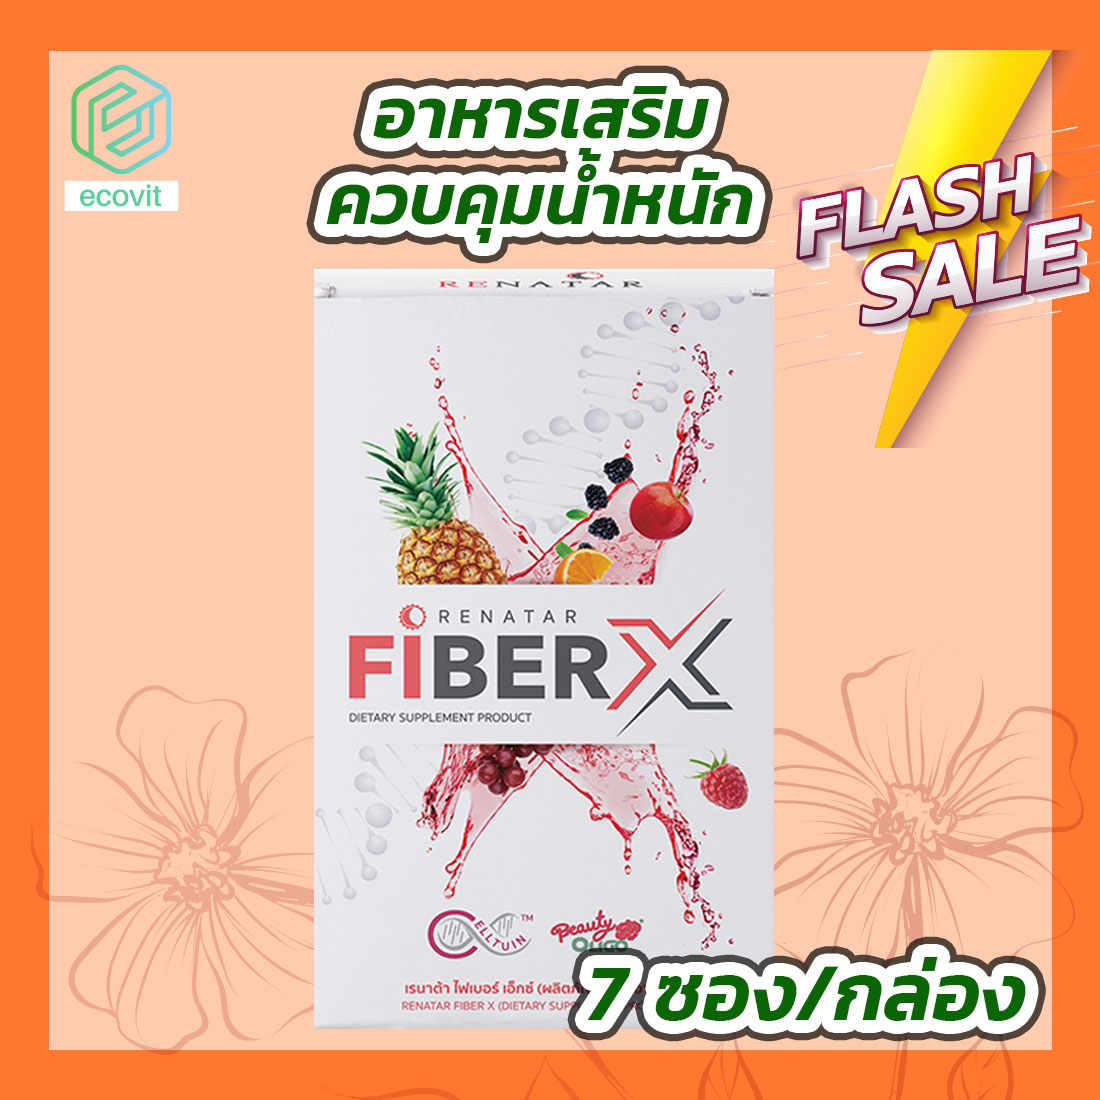 Renatar Fiber X (7 ซอง) เรนาต้าไฟเบอร์ X  อาหารเสริม By Ecovit